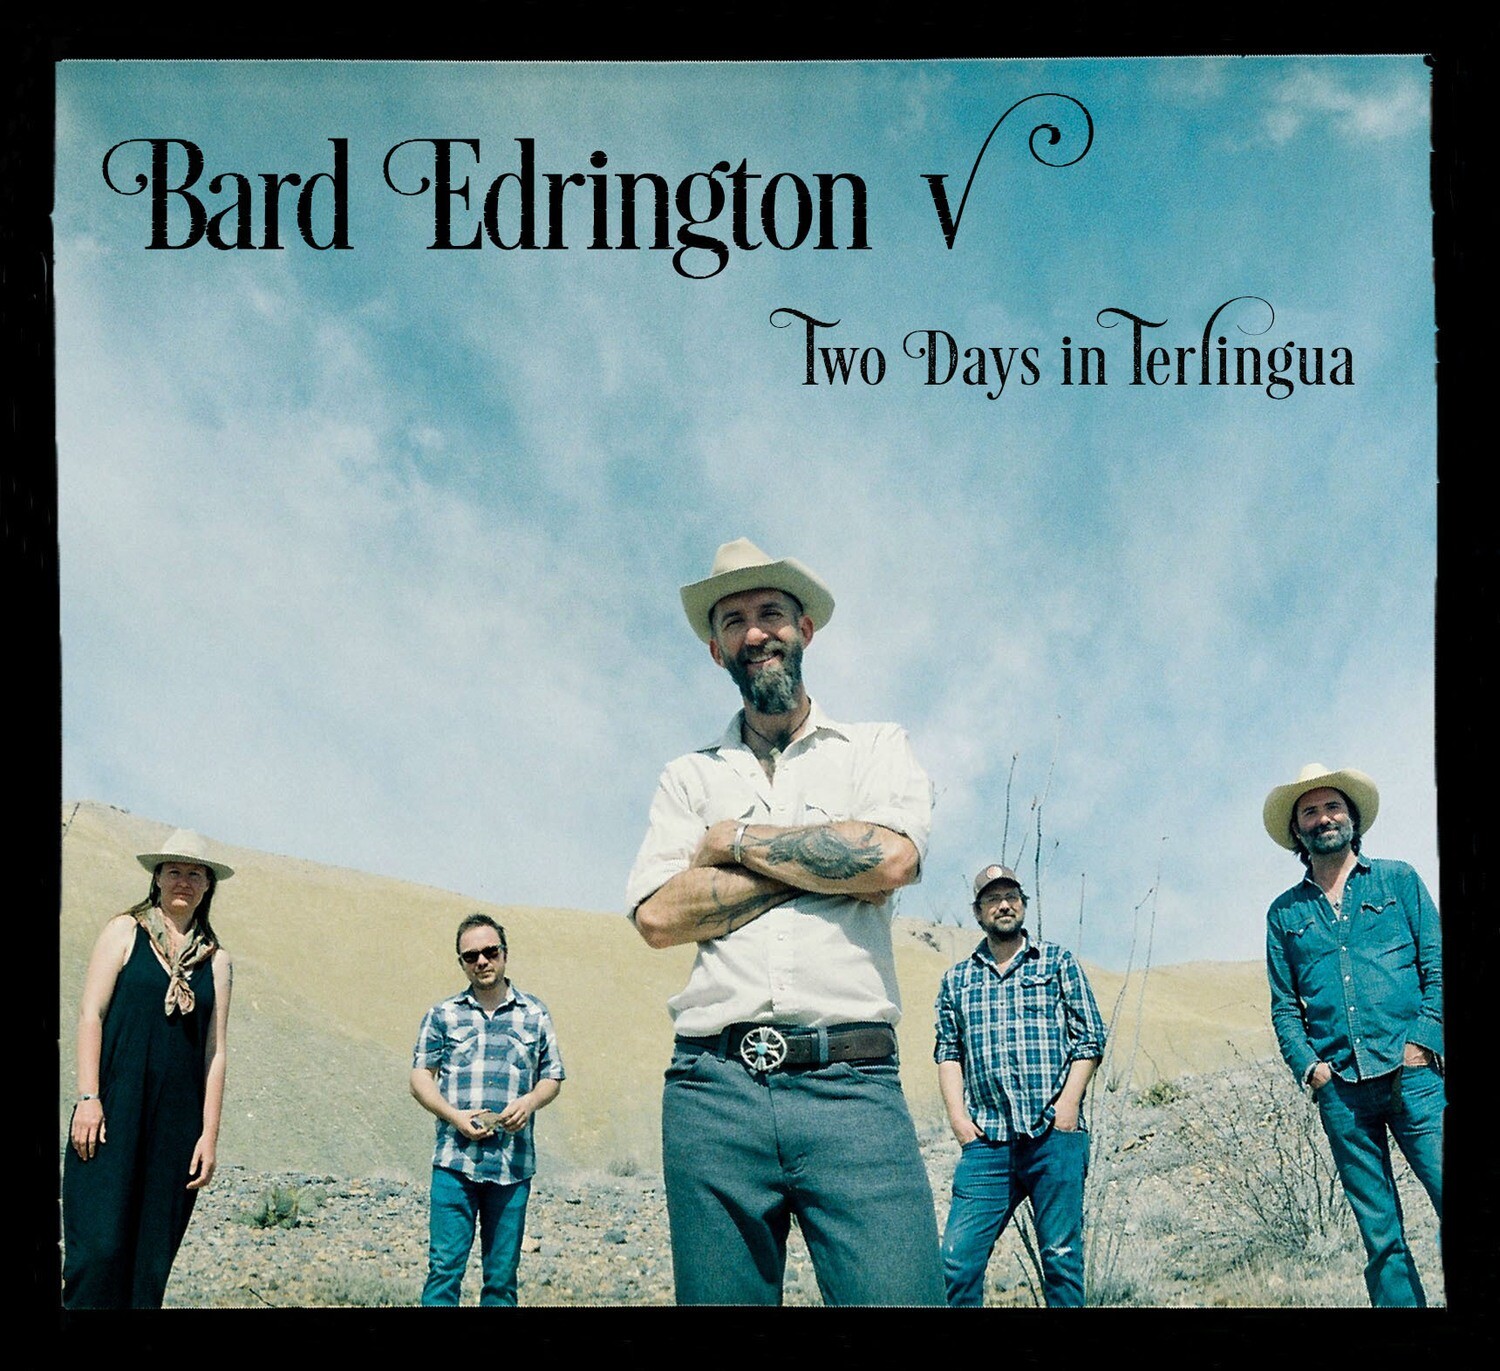 Bard Edrington V "Two Days in Terlingua"